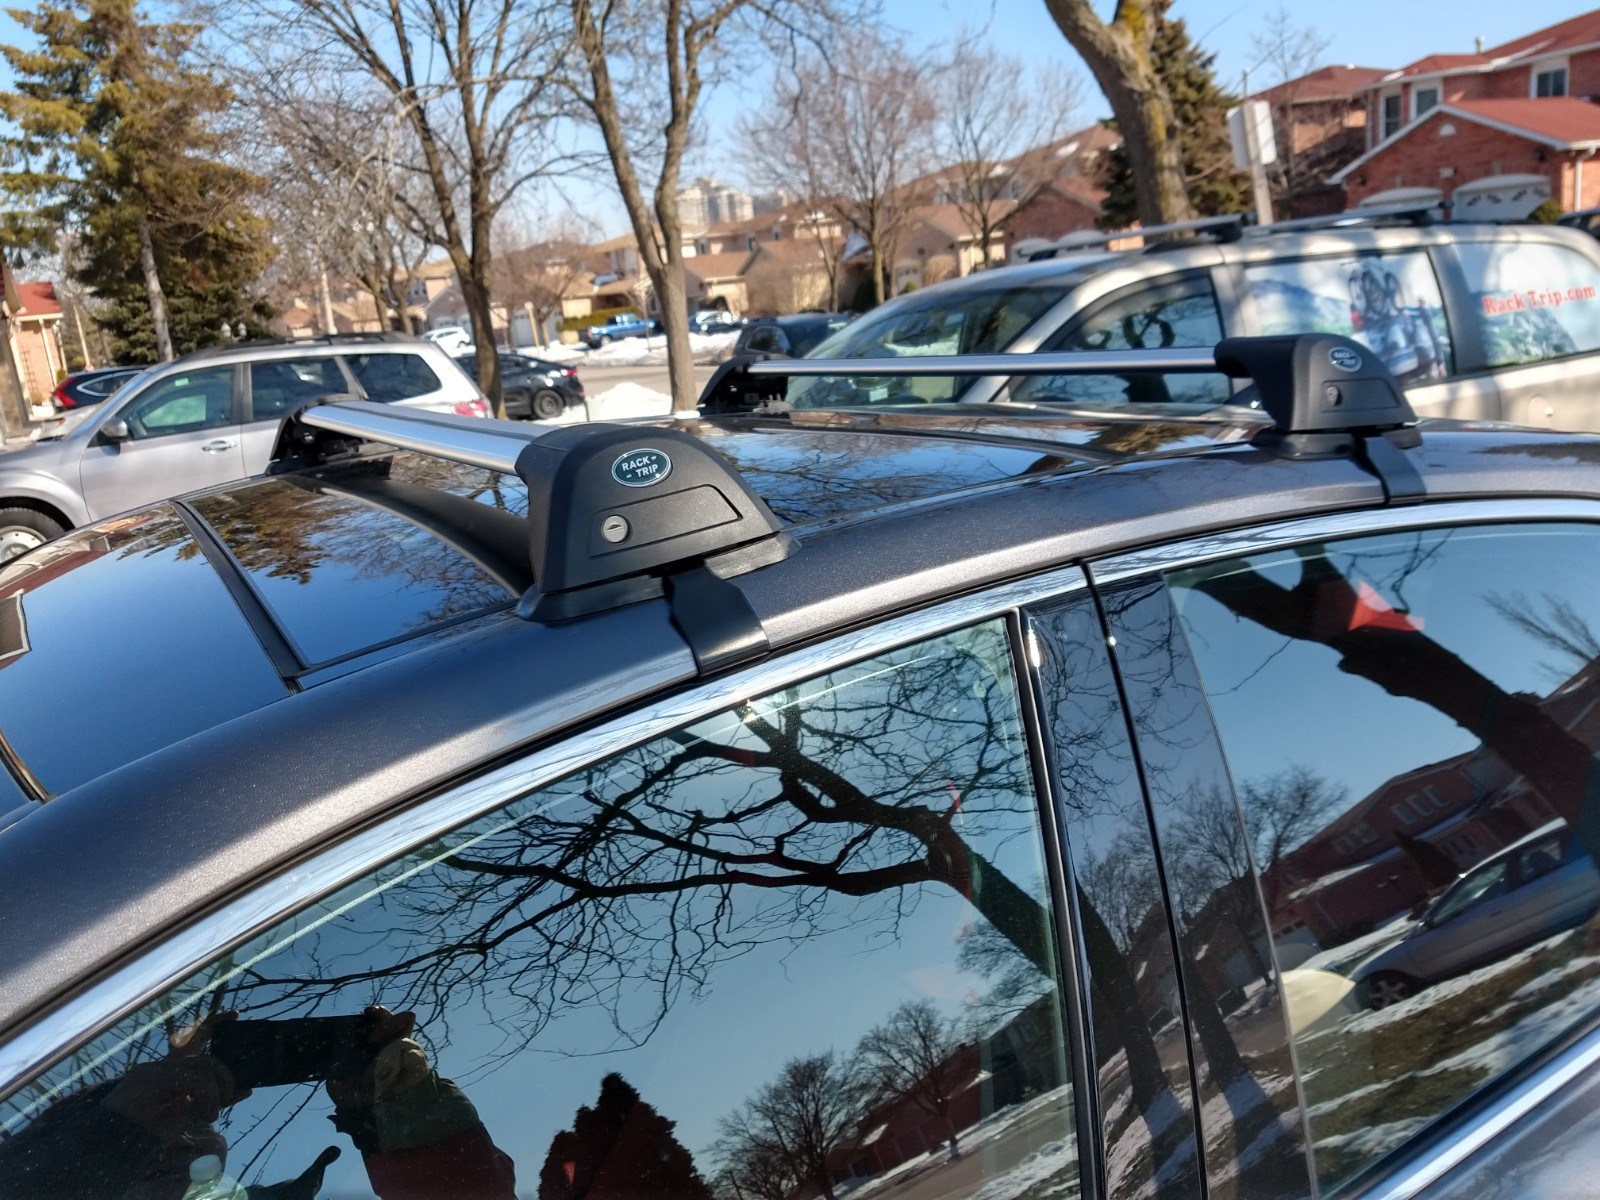 2019 Toyota Camry Bare Roof Rack - RackTrip - Canada Car Racks and More!